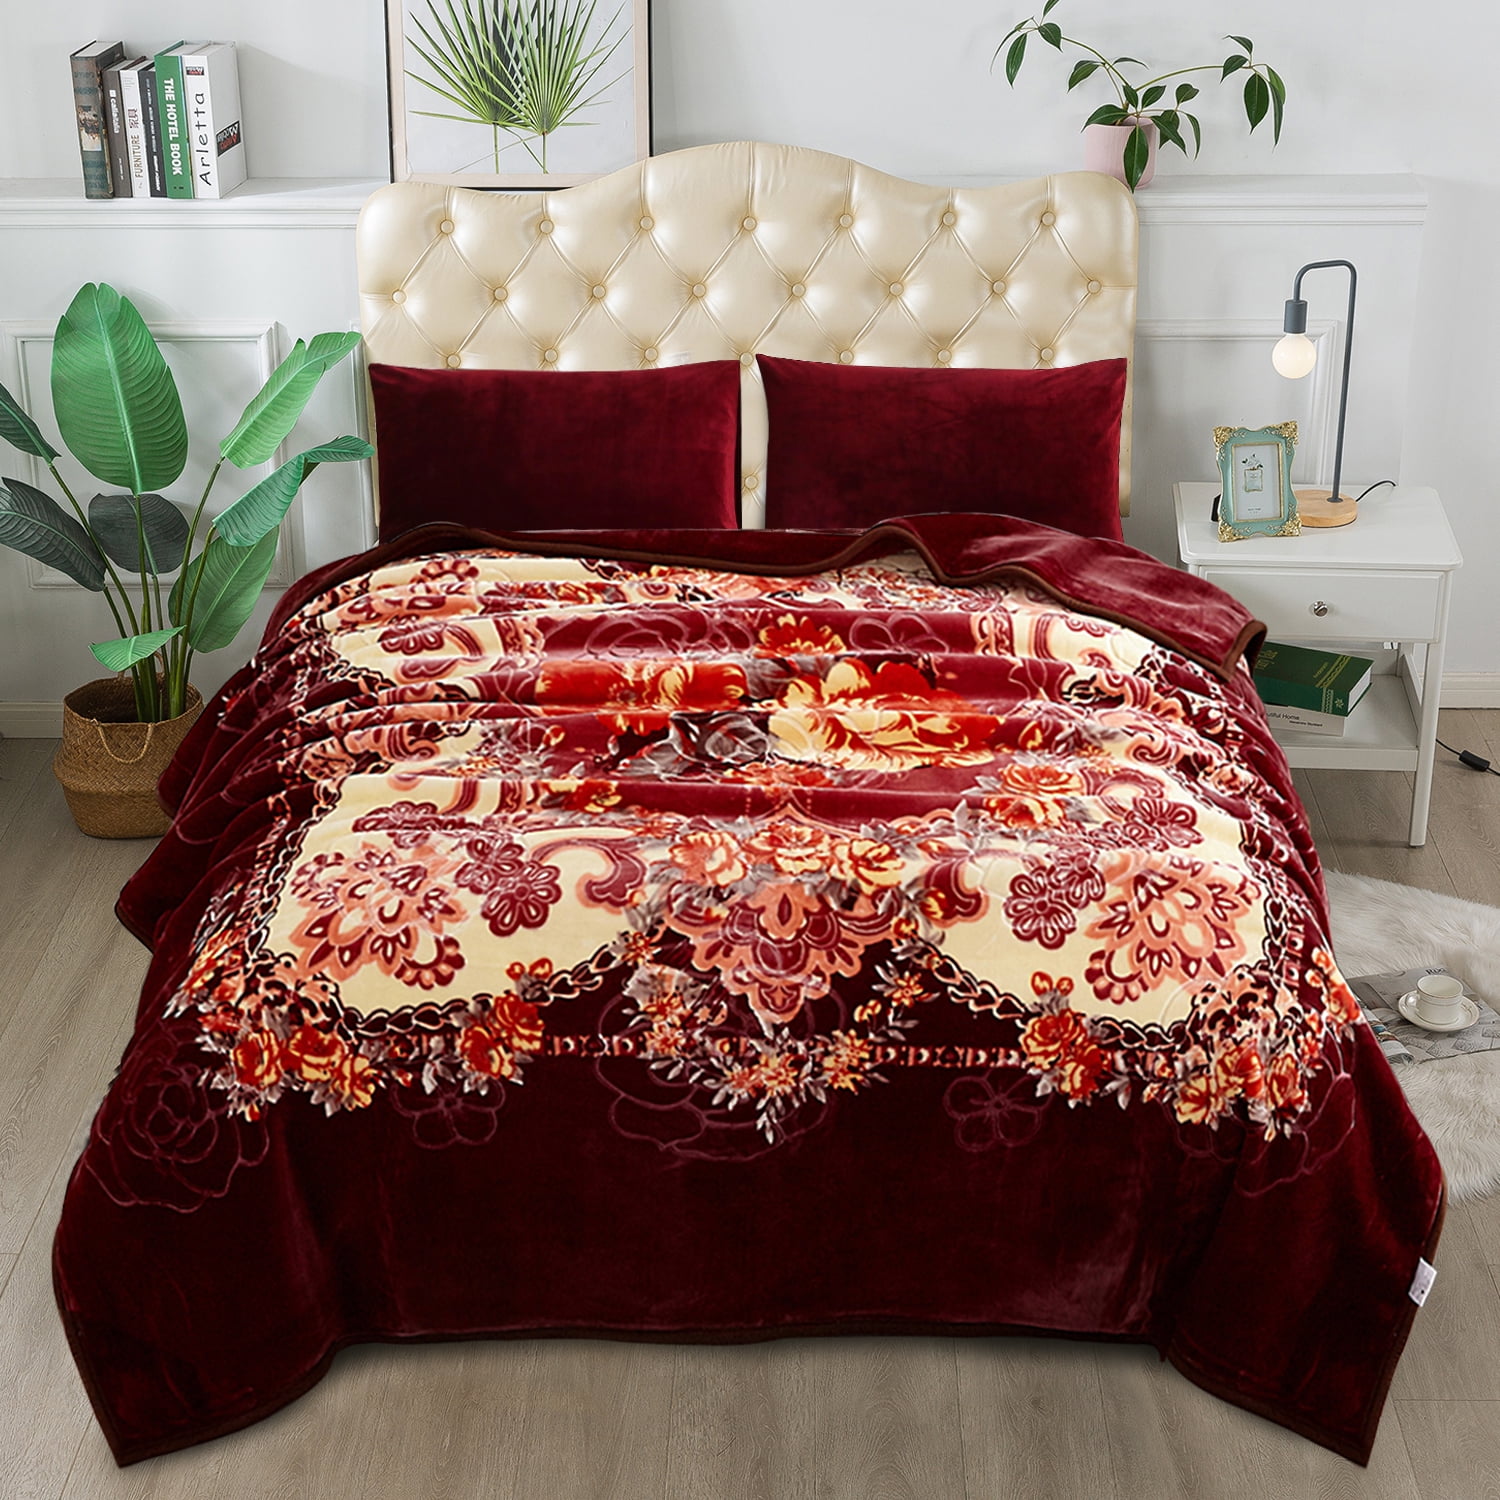 JML 2 Ply Fleece Plush Bed Blanket,Heavy Thick Soft Warm Mink Blanket for  Winter Queen,79x91,8.5lb 